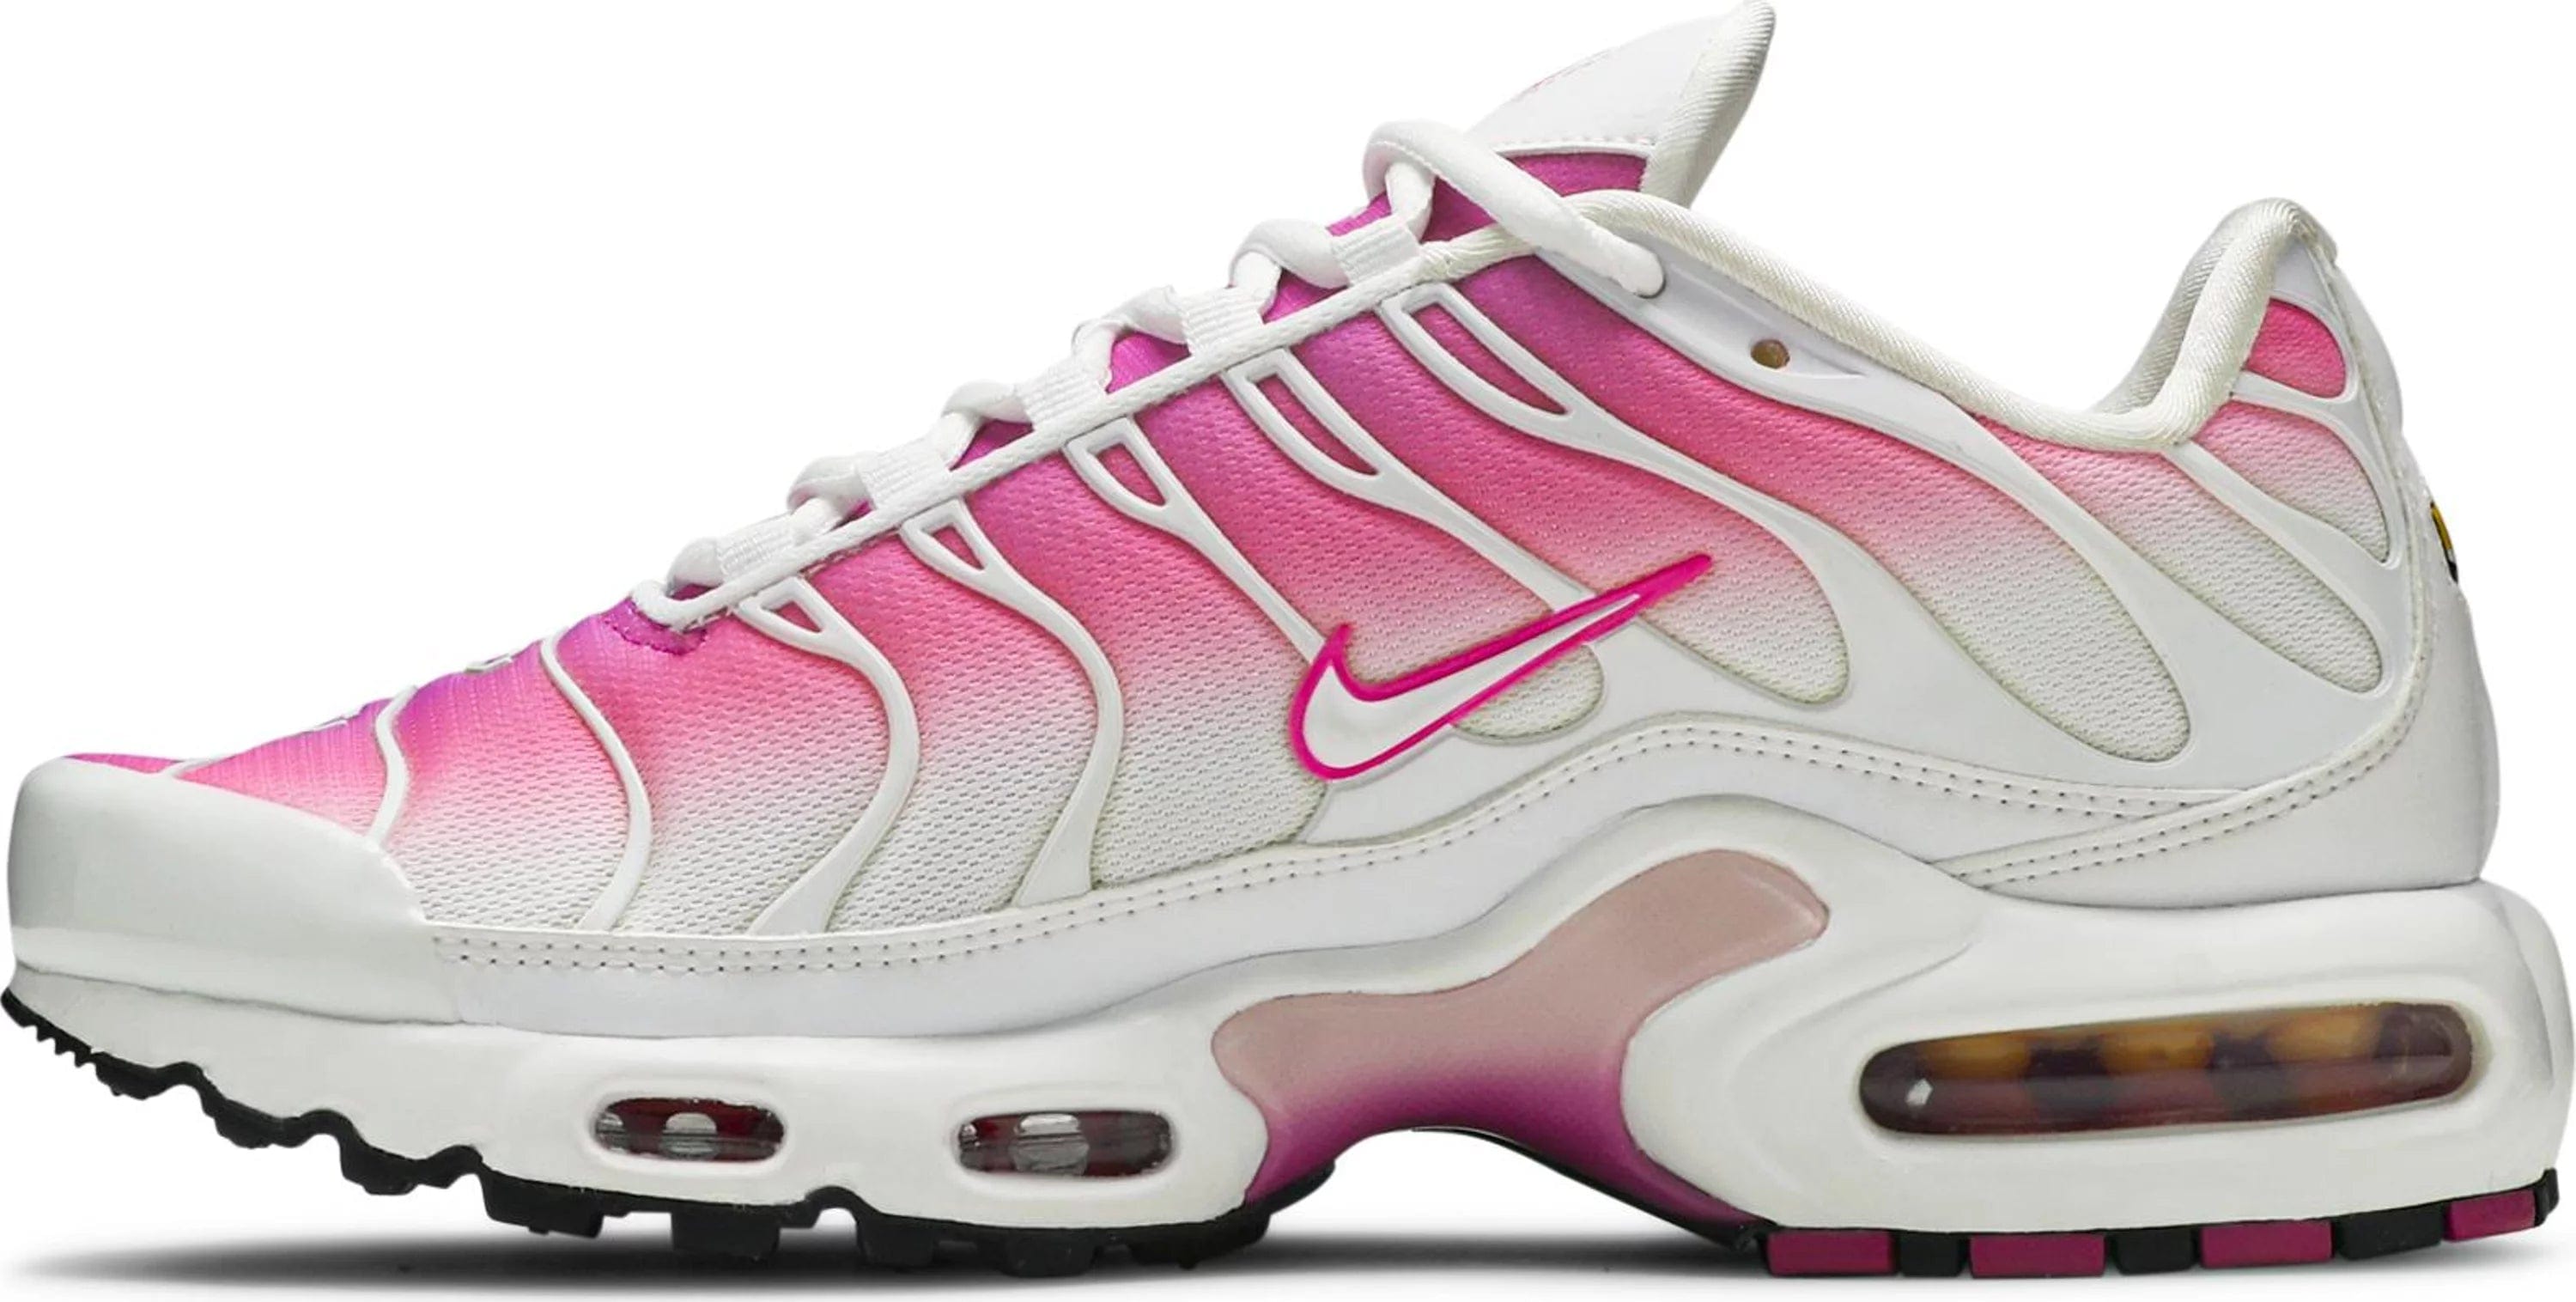 sneakers Nike Air Max Plus TN Pink Fade Women's